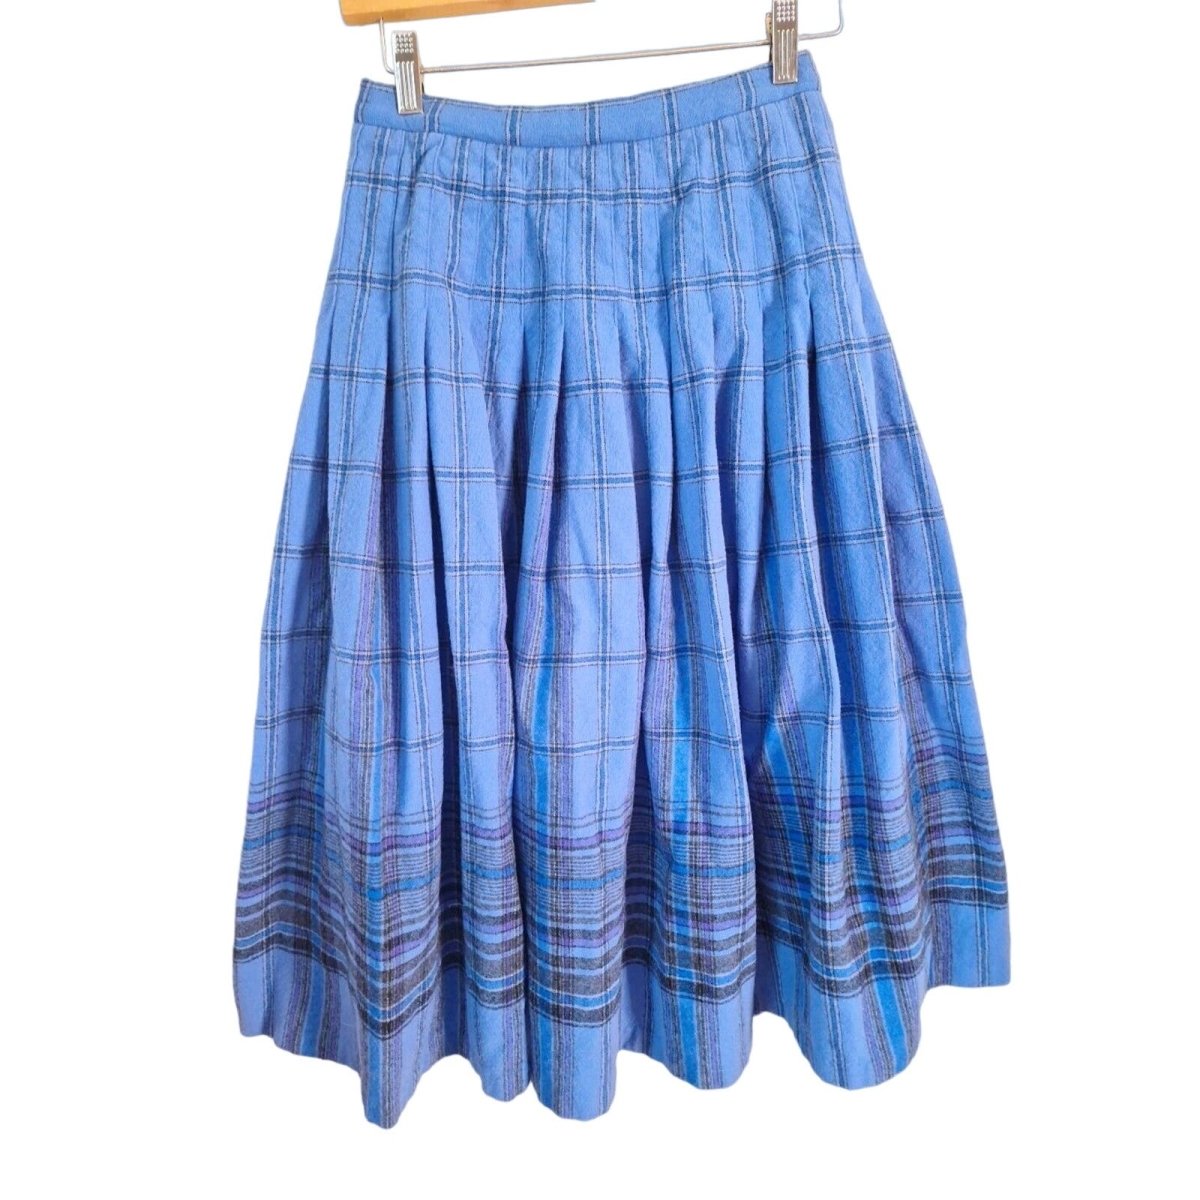 Vintage 1980s Periwinkle Plaid Pendleton Wool Skirt Women Size Small Waist 25"-26" - themallvintage The Mall Vintage